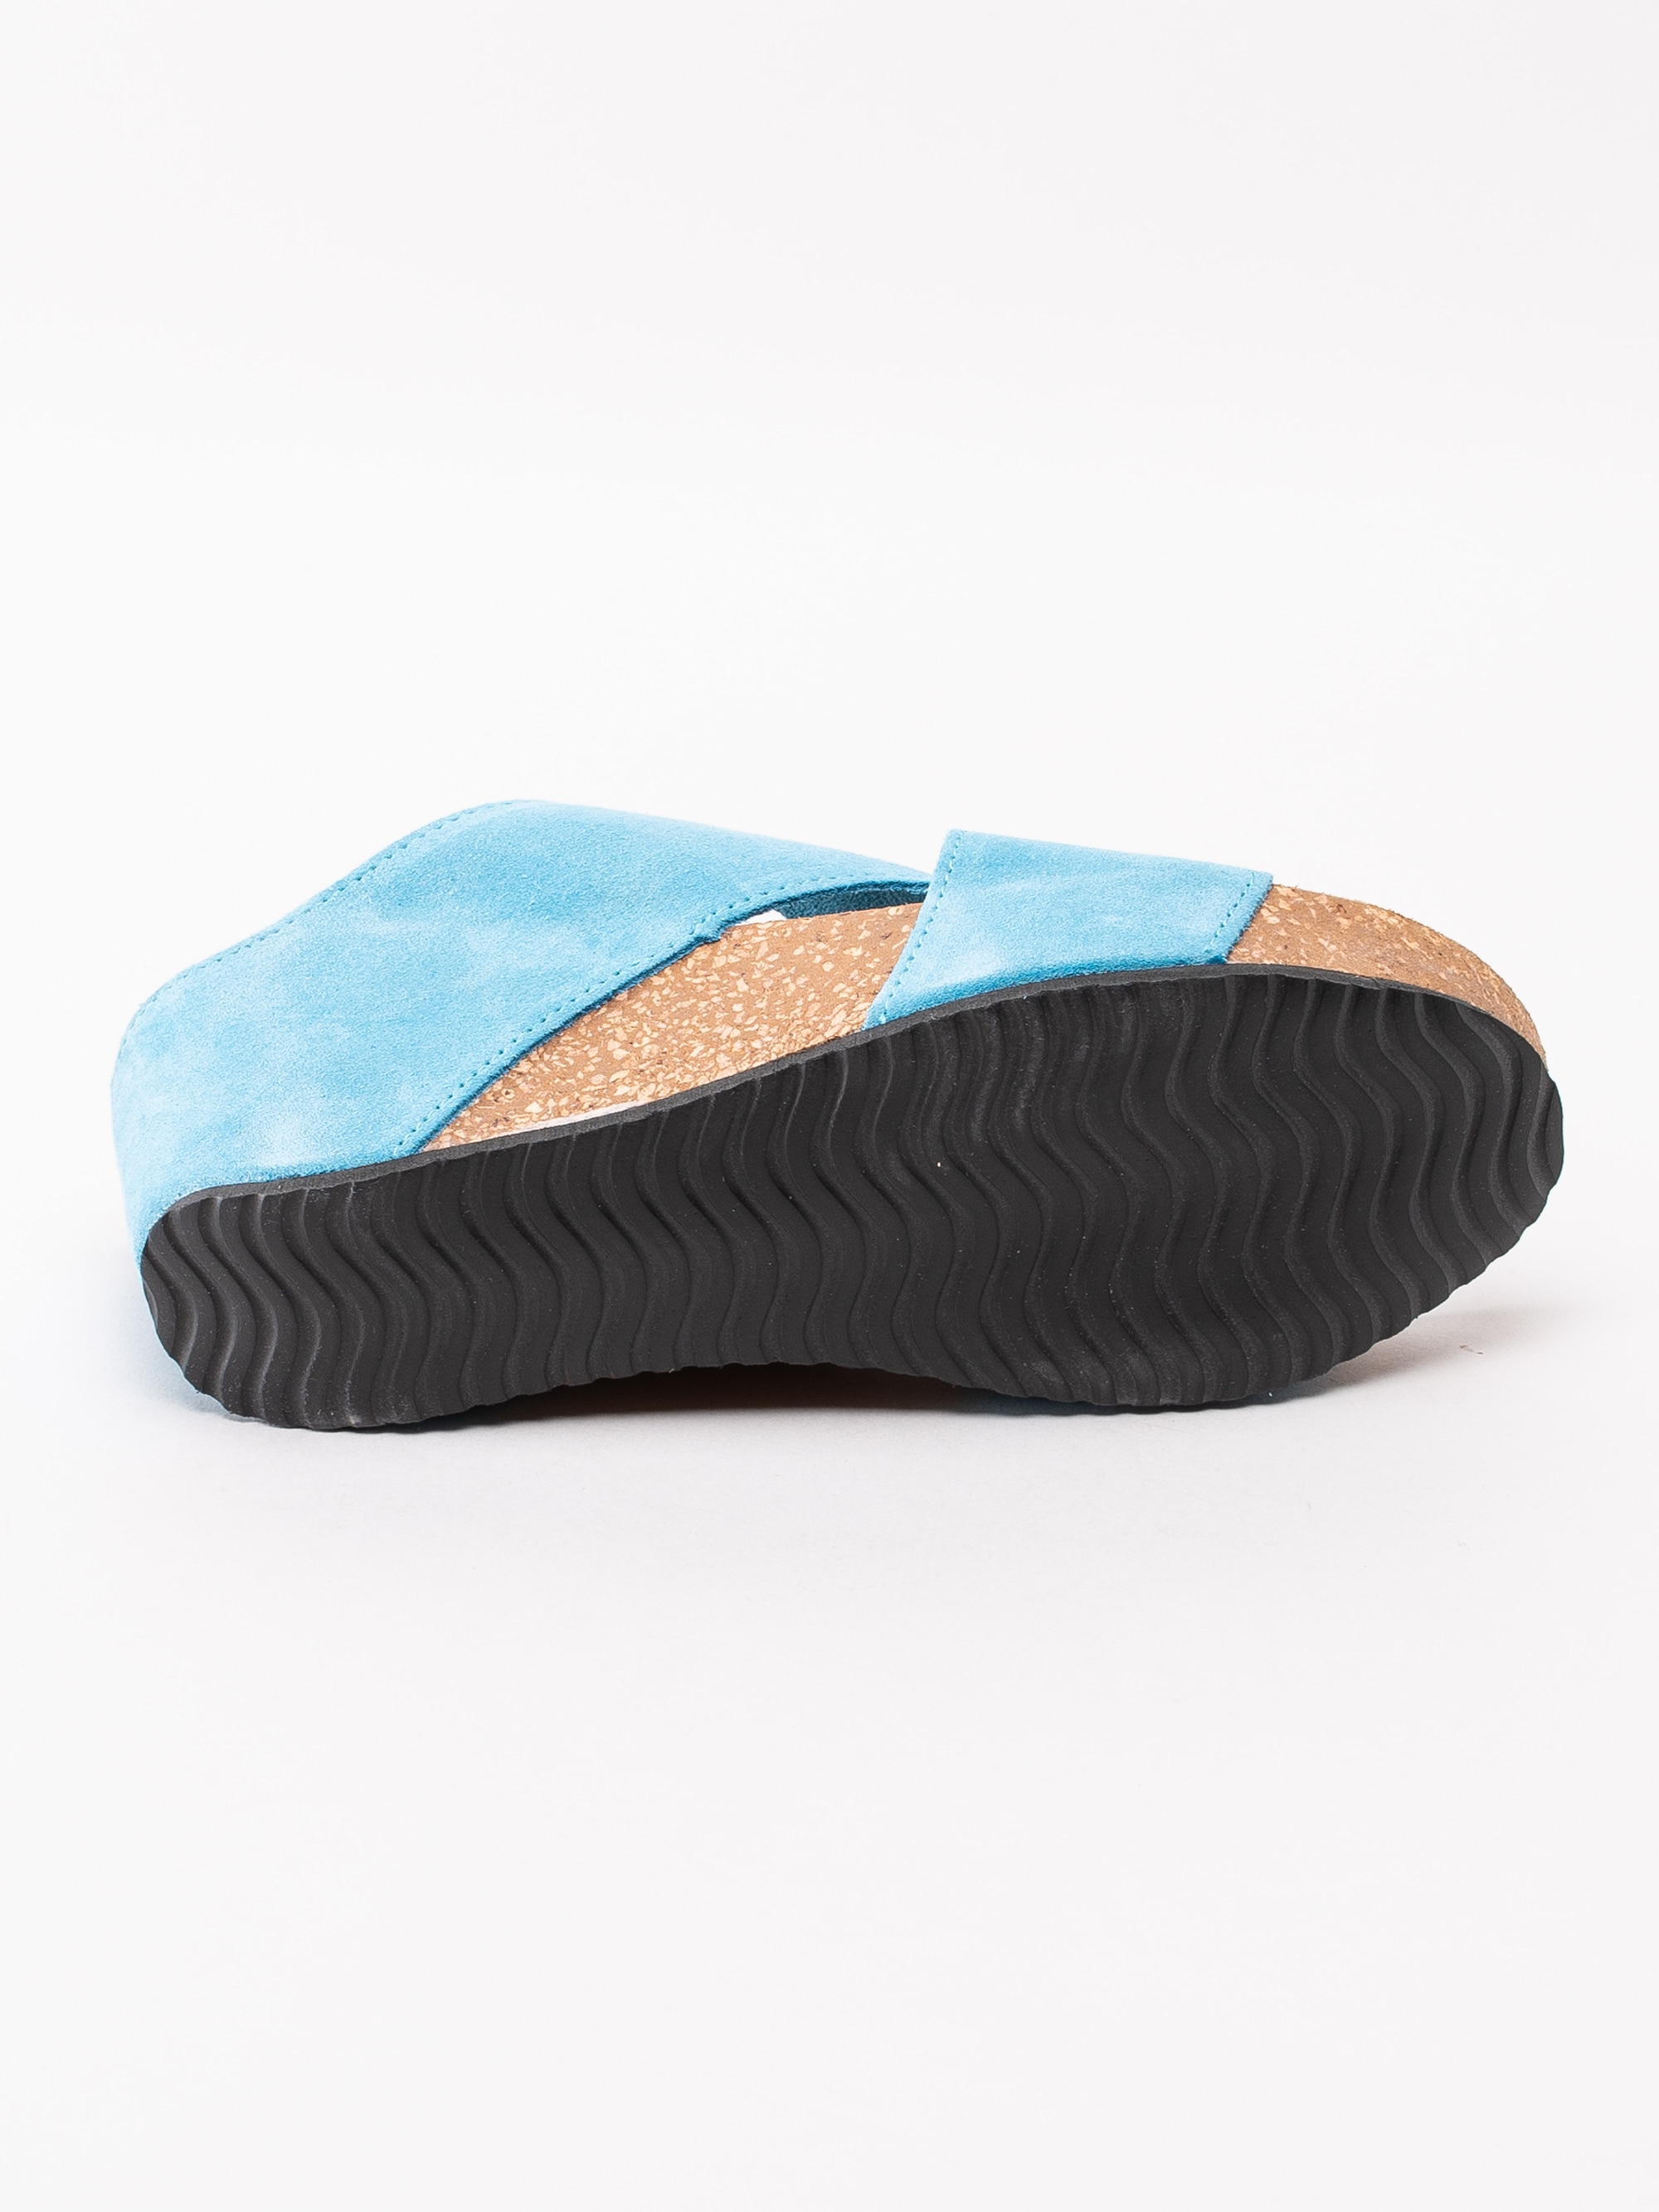 06191162 Copenhagen Shoes Frances Jeans Blue ljusblå slip in sandaler med korkkil-5